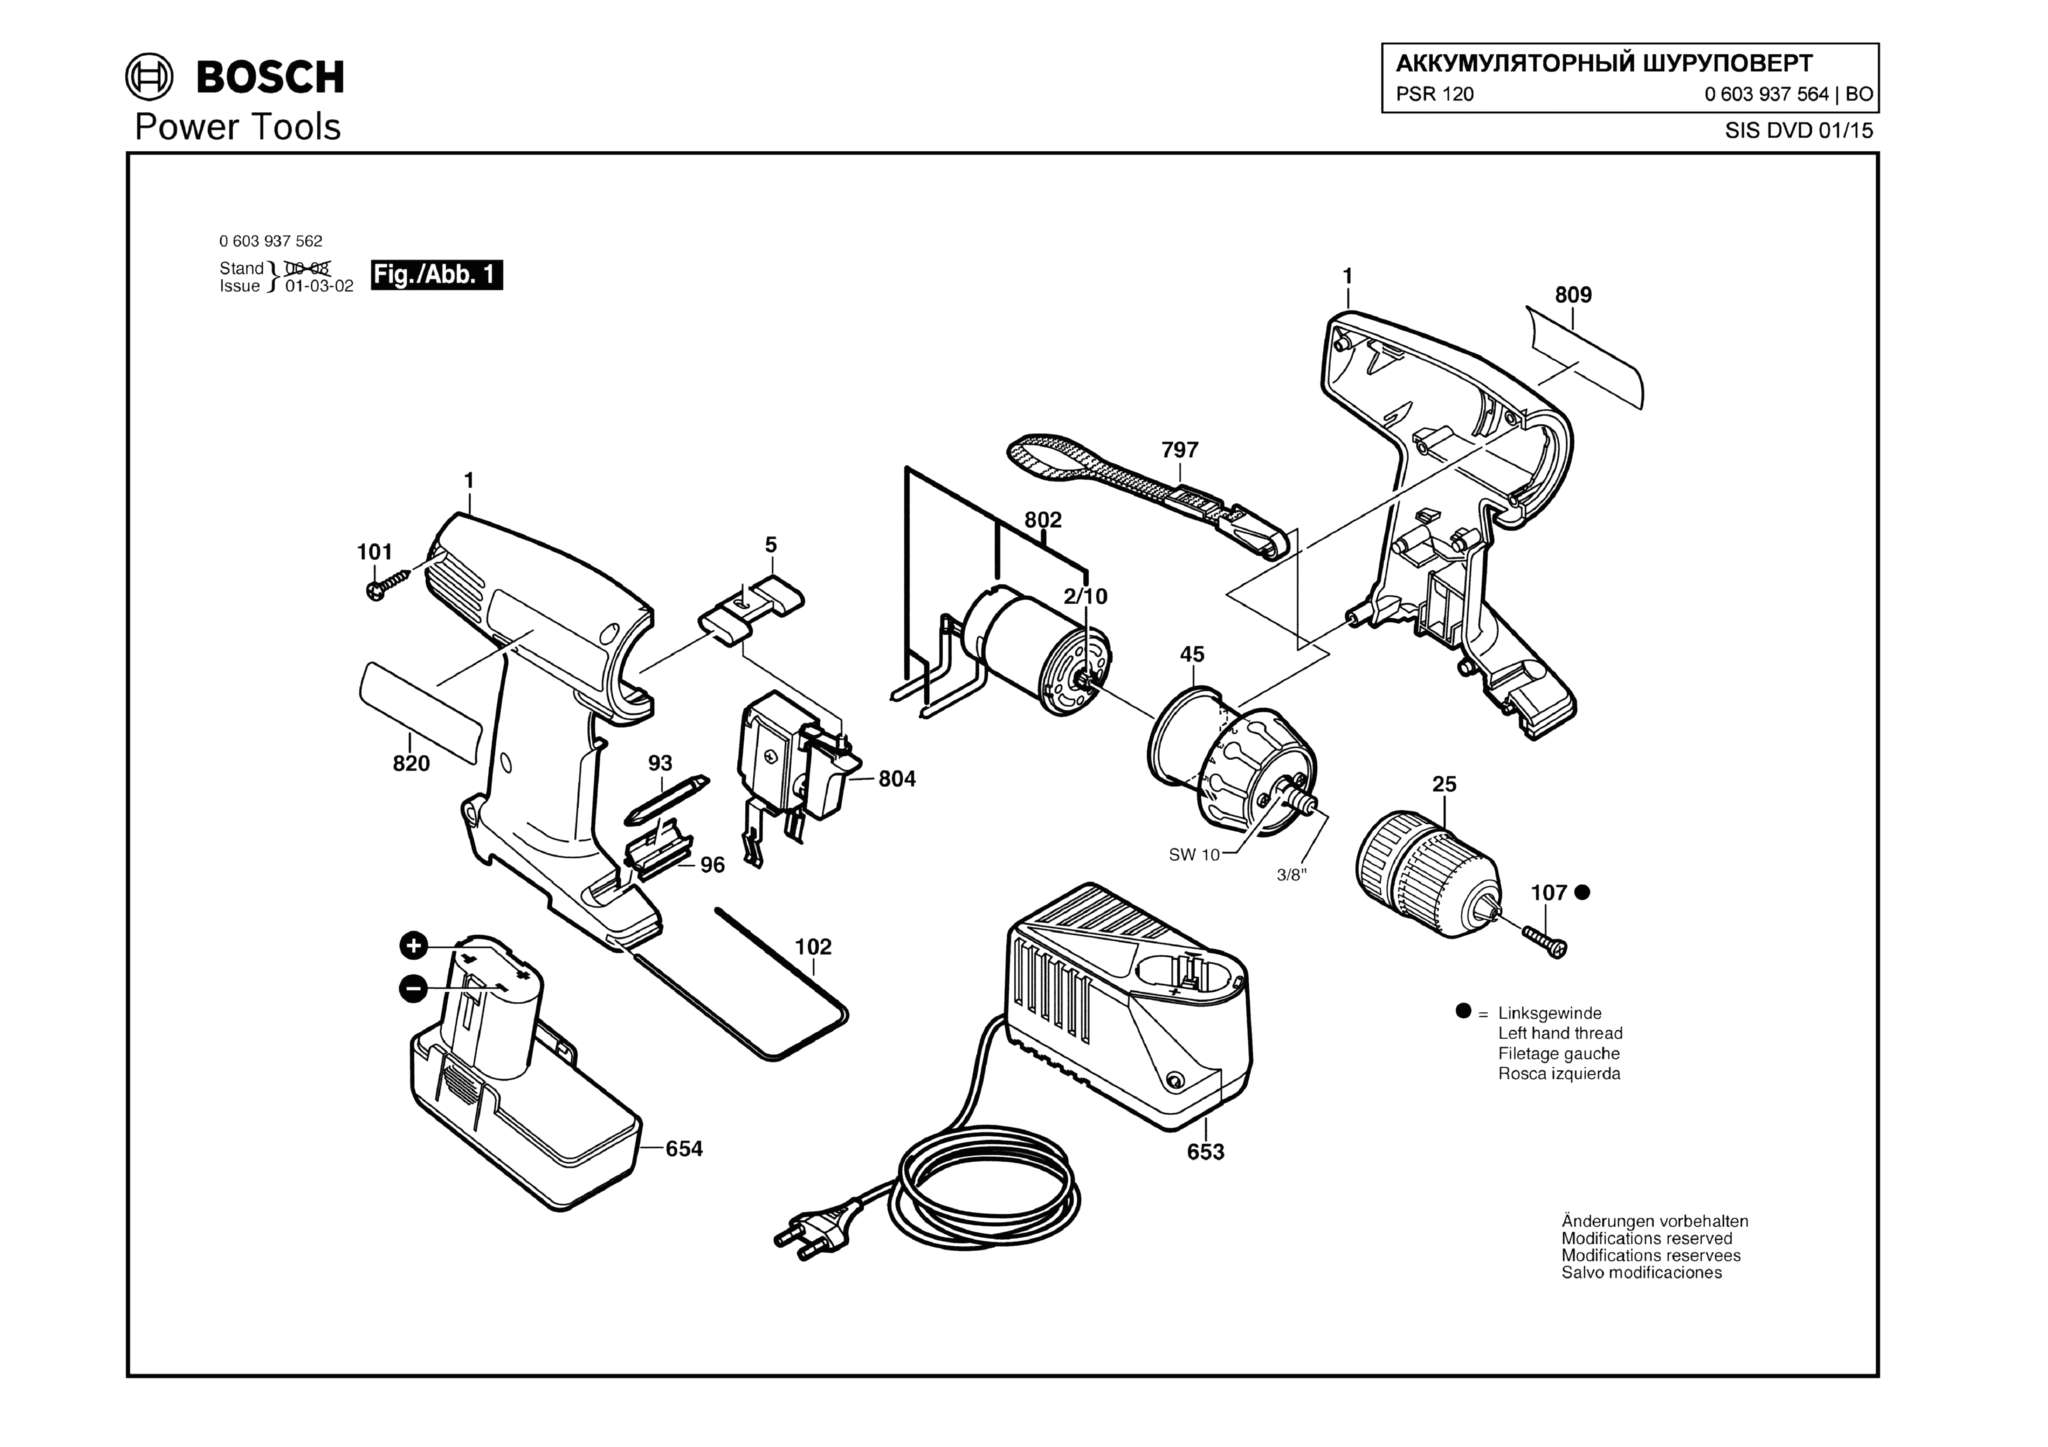 Запчасти, схема и деталировка Bosch PSR 120 (ТИП 0603937564)